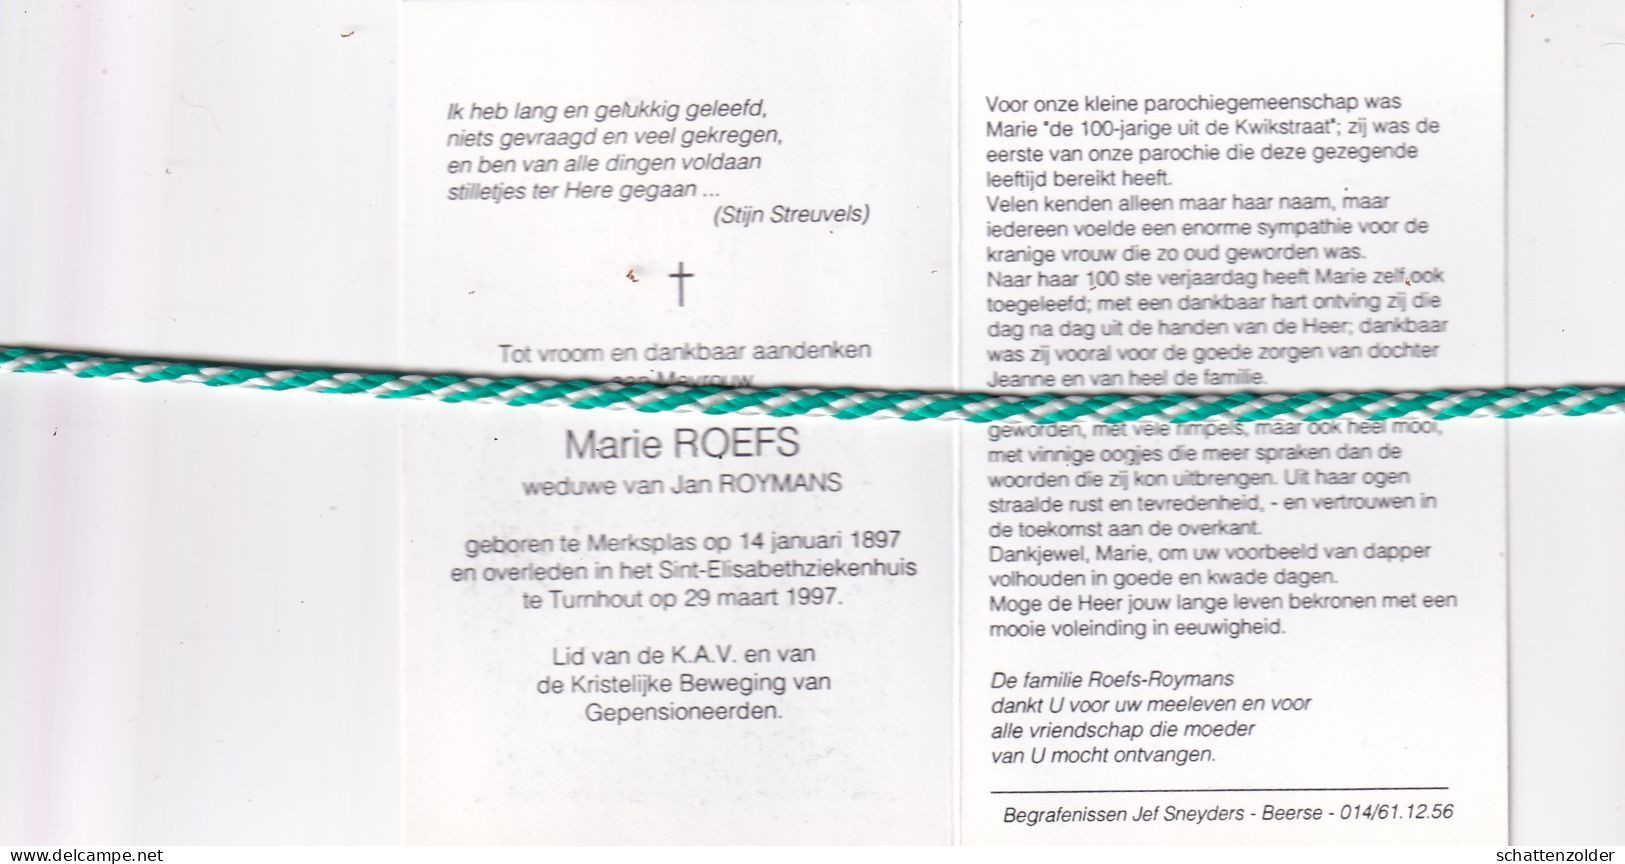 Maria Roefs-Roymans, Merksplas 1897, Turnhout 1997. Honderdjarige. Foto - Todesanzeige